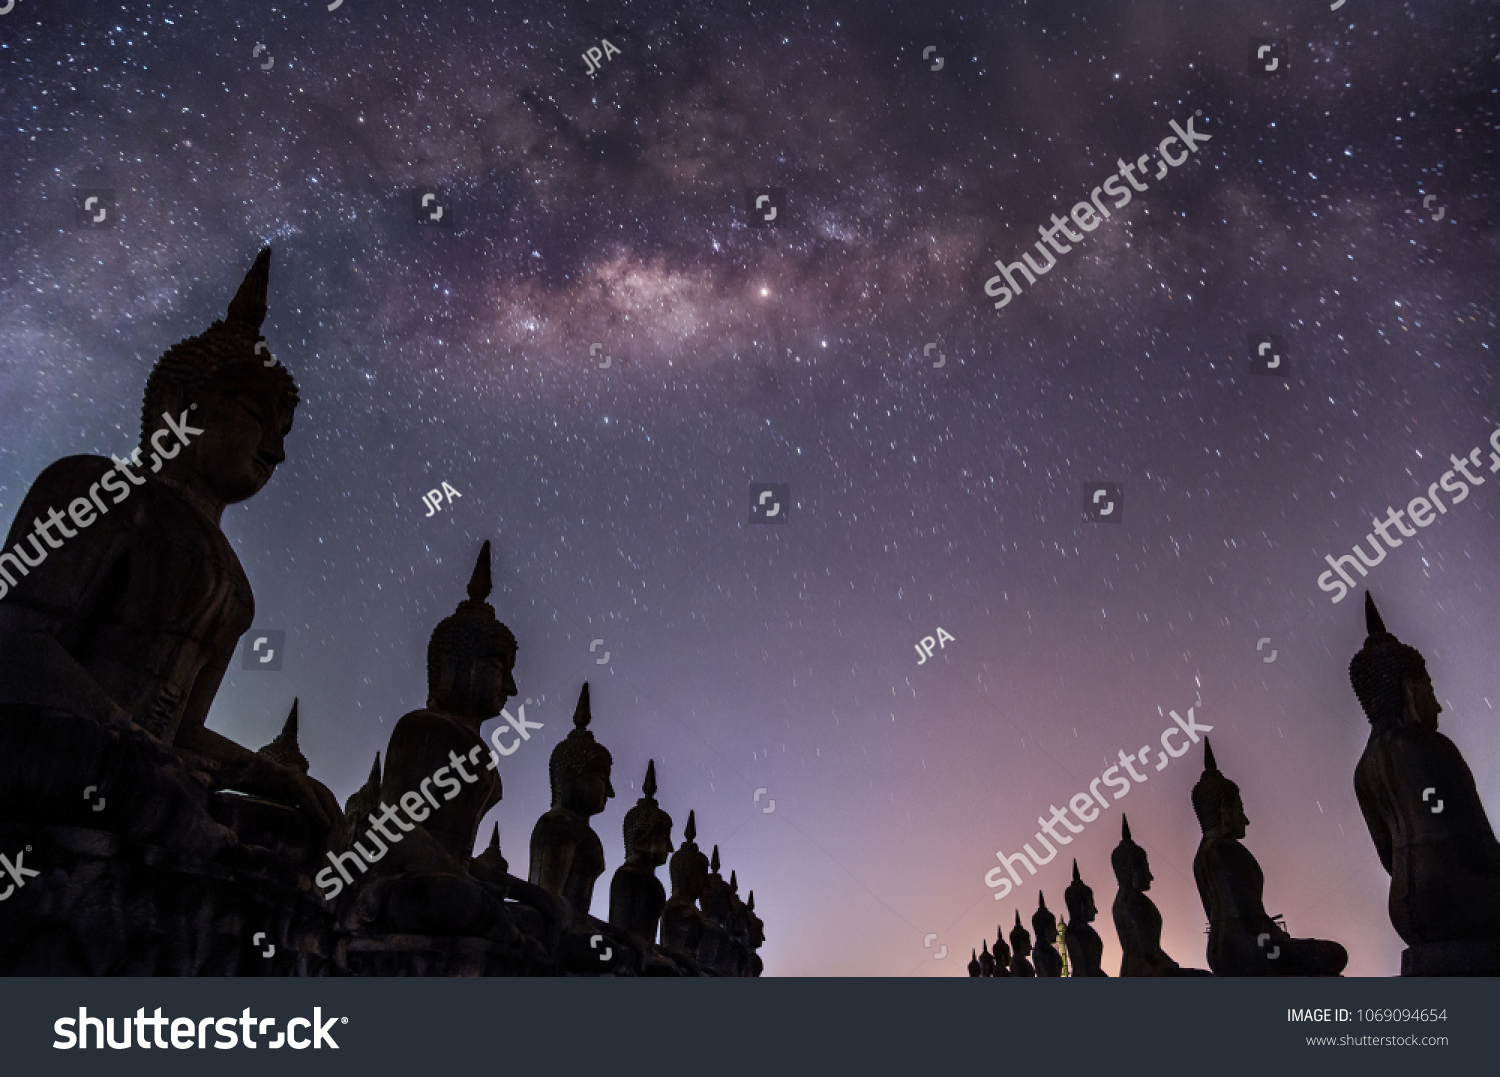 Milky way galaxy with buddha stature landscape nature dark filter style, Nakhon Si Thammarat province Thailand, Public in thailand #1069094654